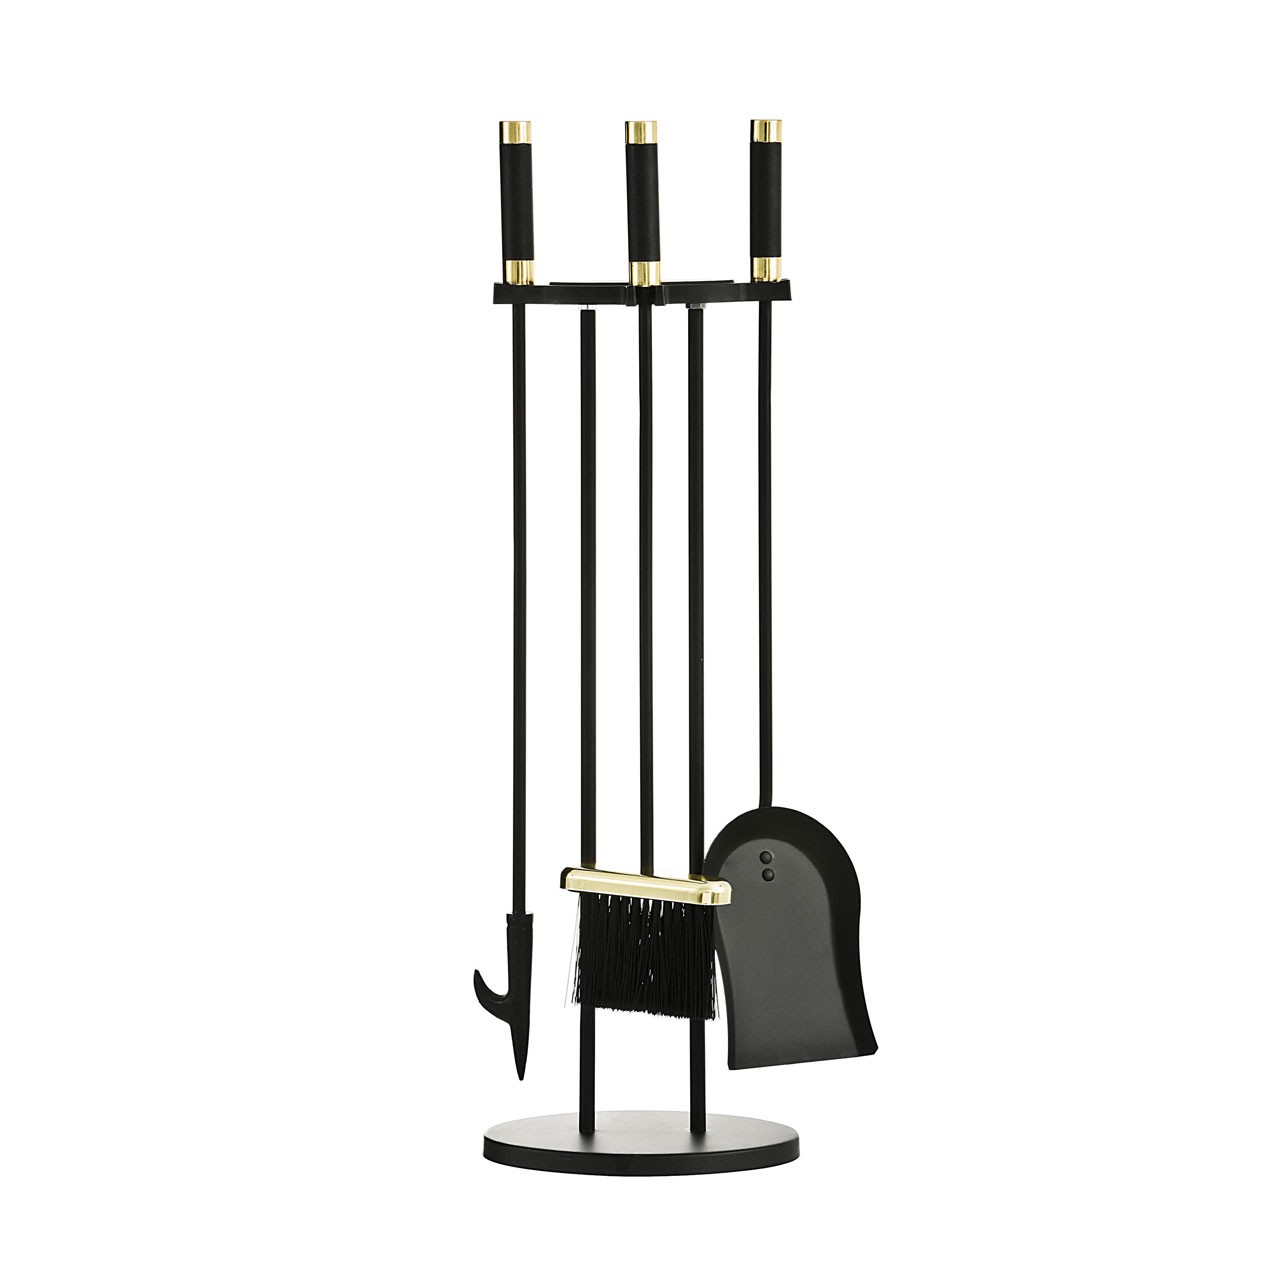 Iron Companion Set with Brass Handles - Black, 3 Pieces